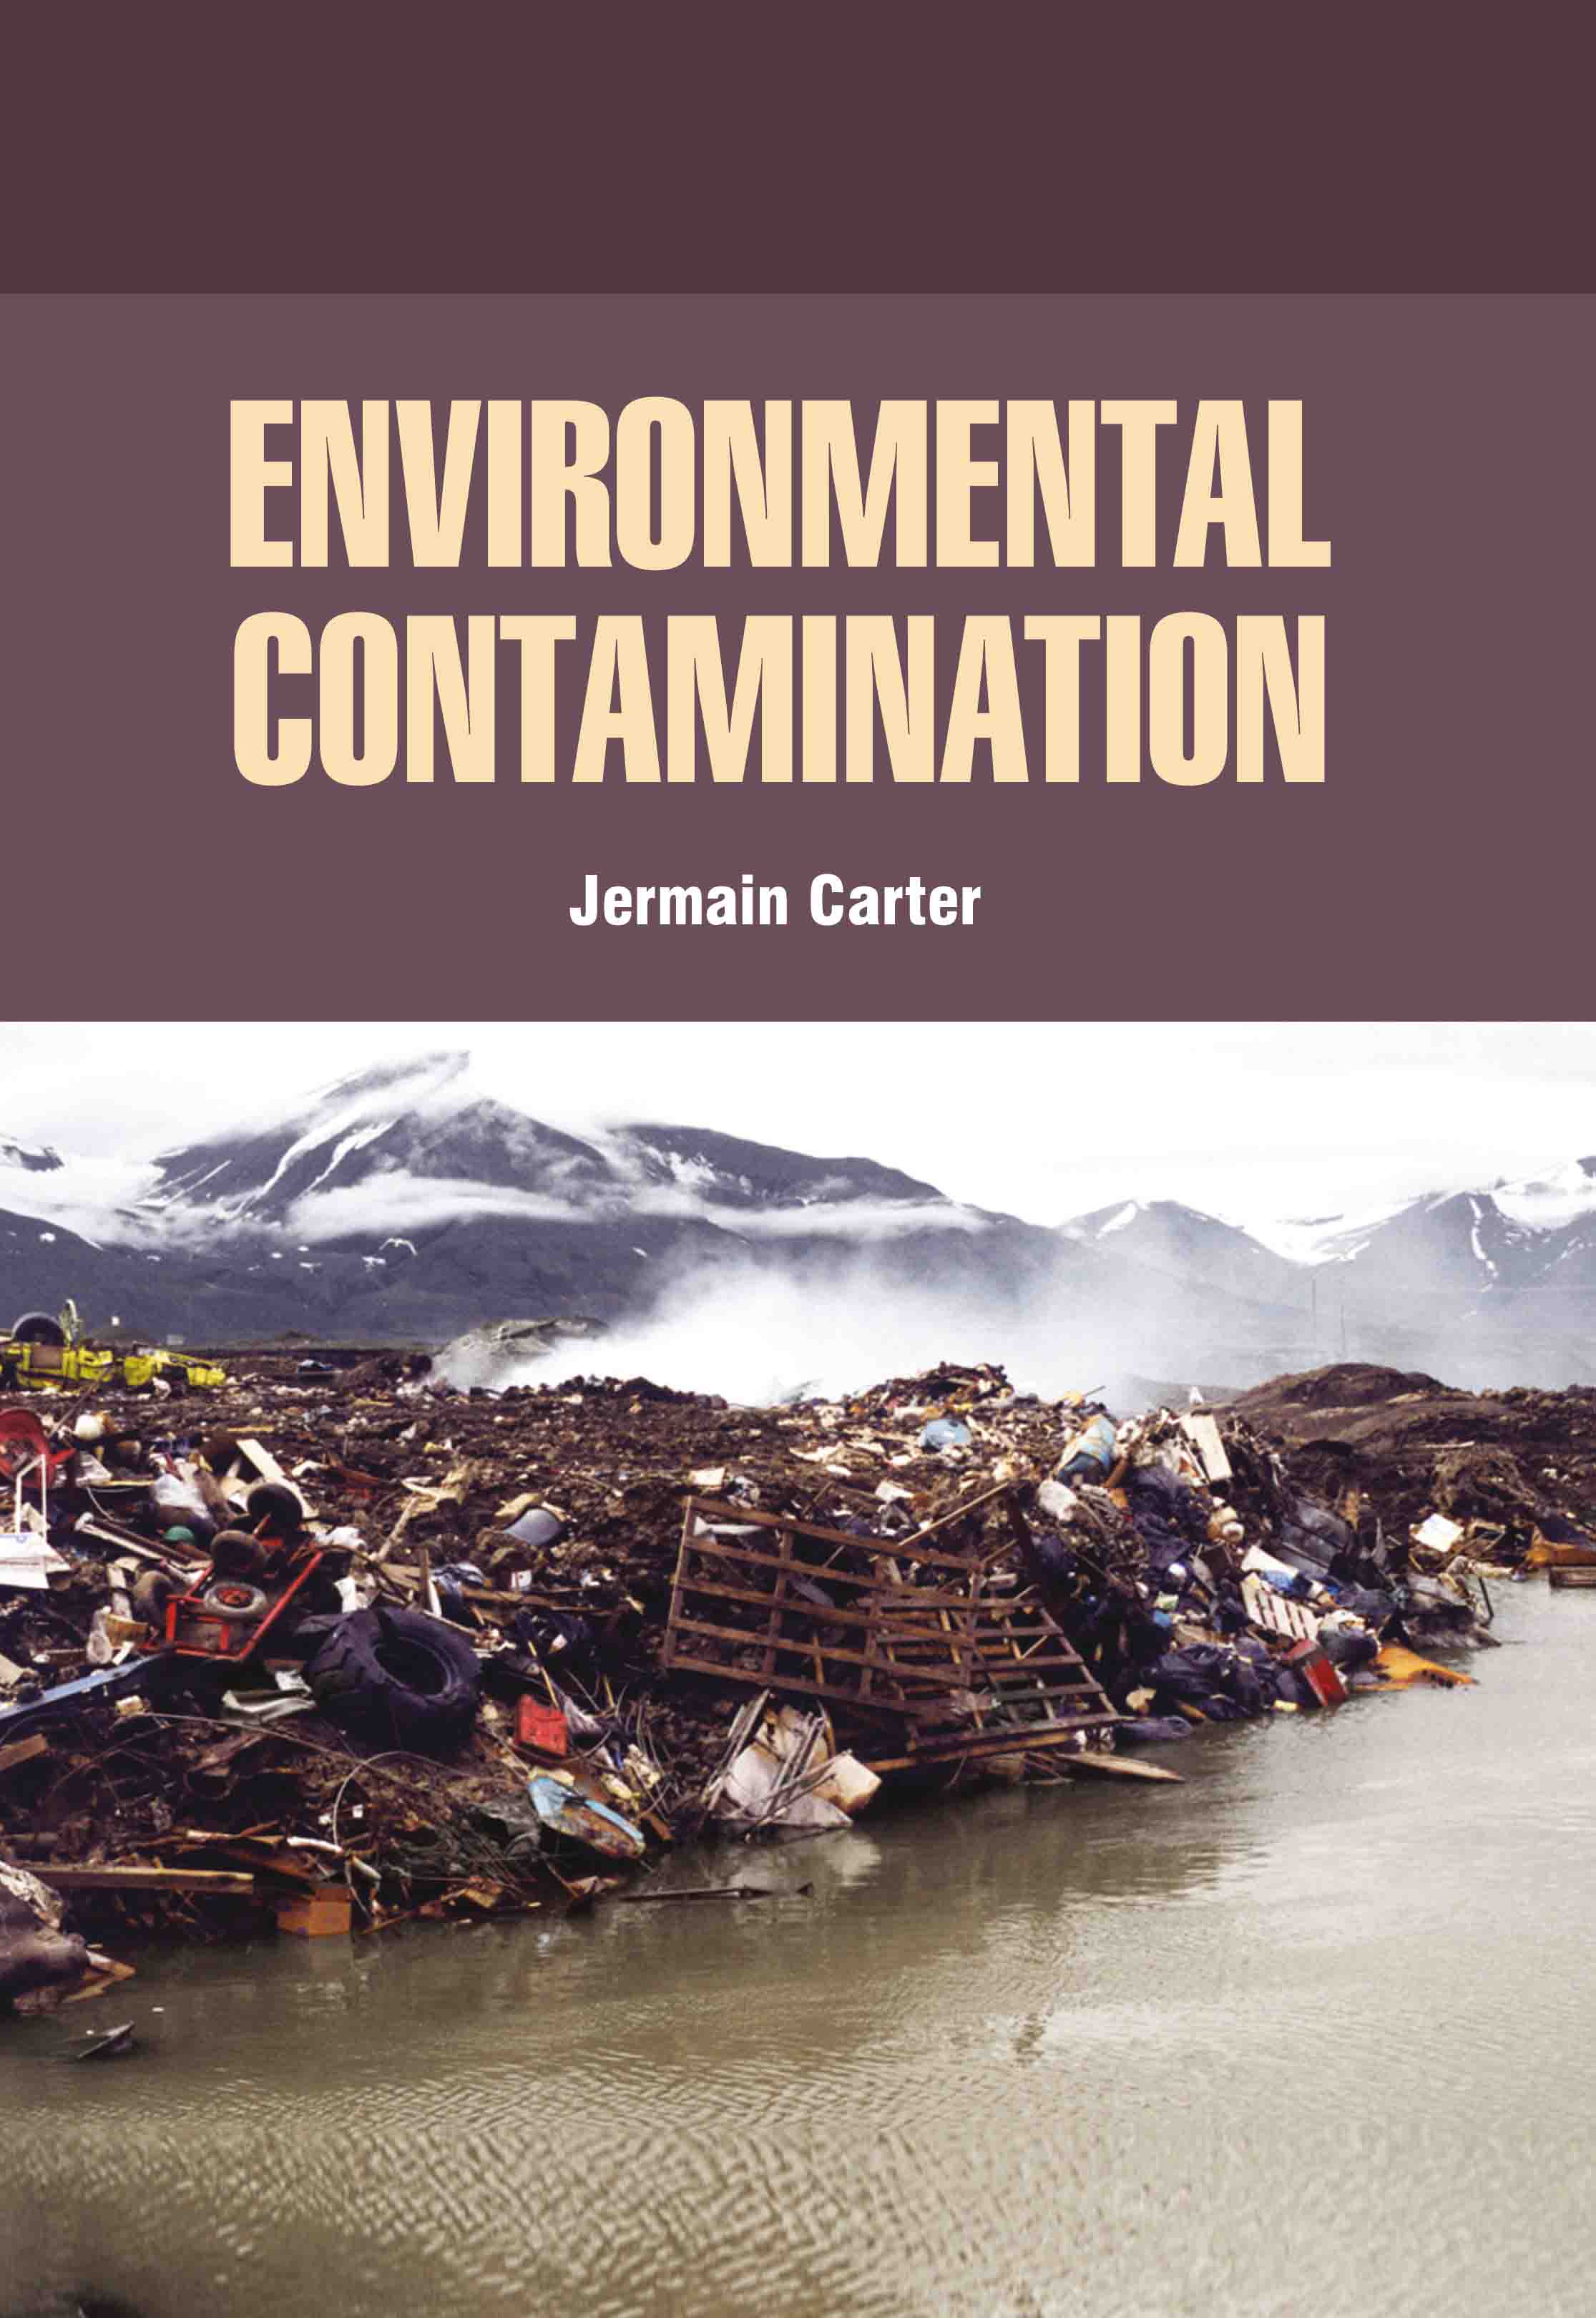 Environmental Contamination